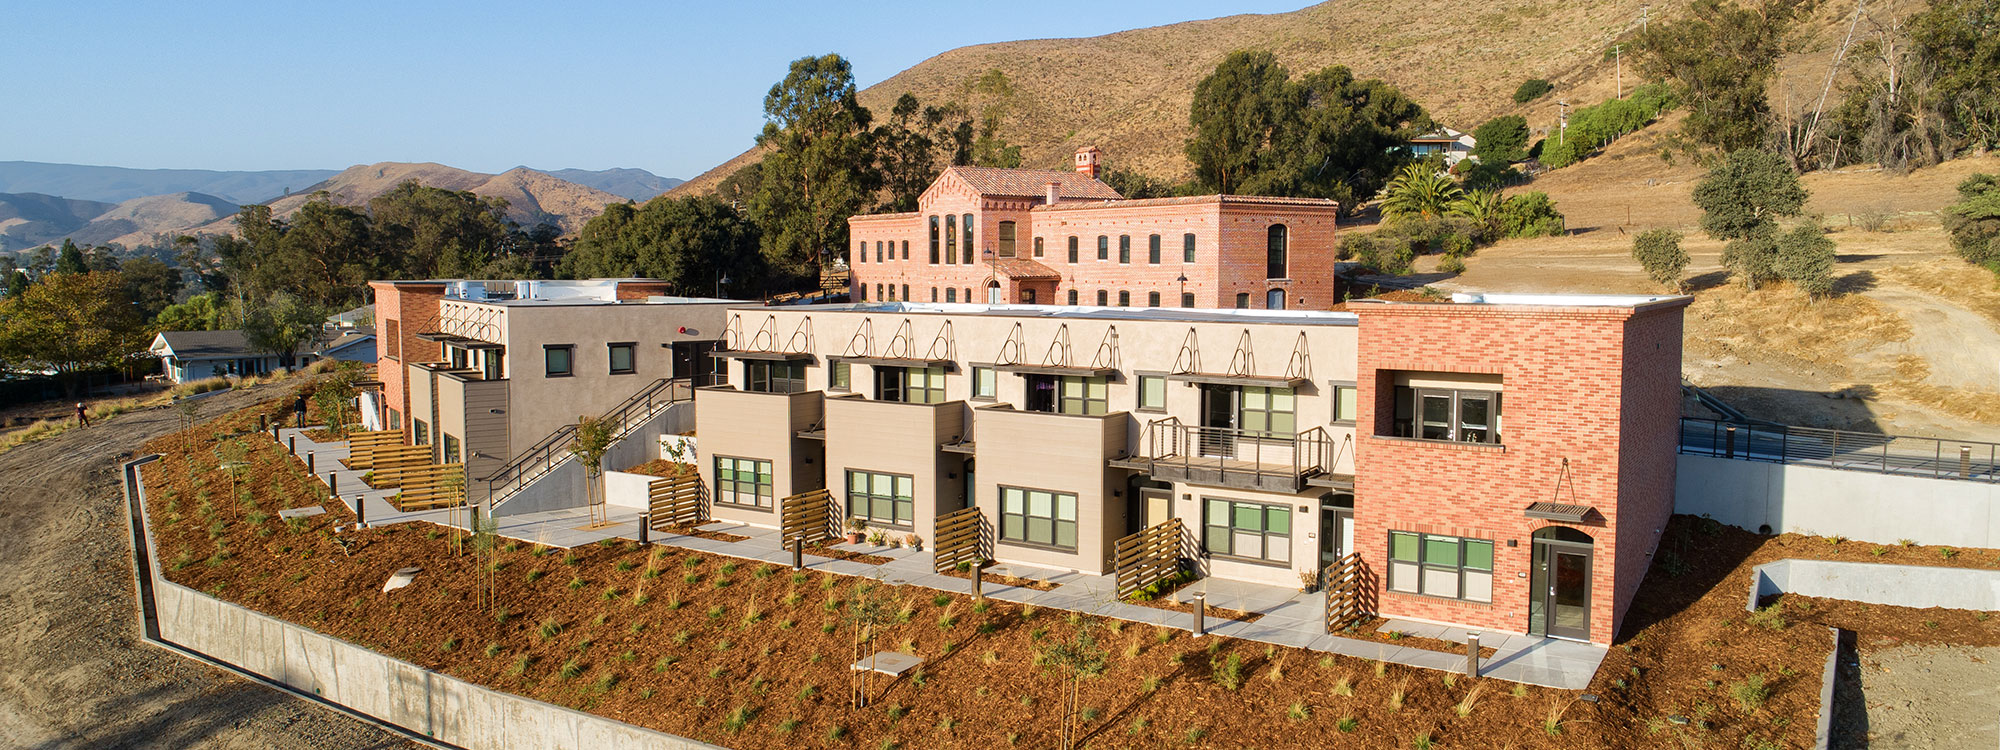 Multi-residence Builder - San Luis Obispo, CA - Retro-fit Contractor - JW Design & Construction